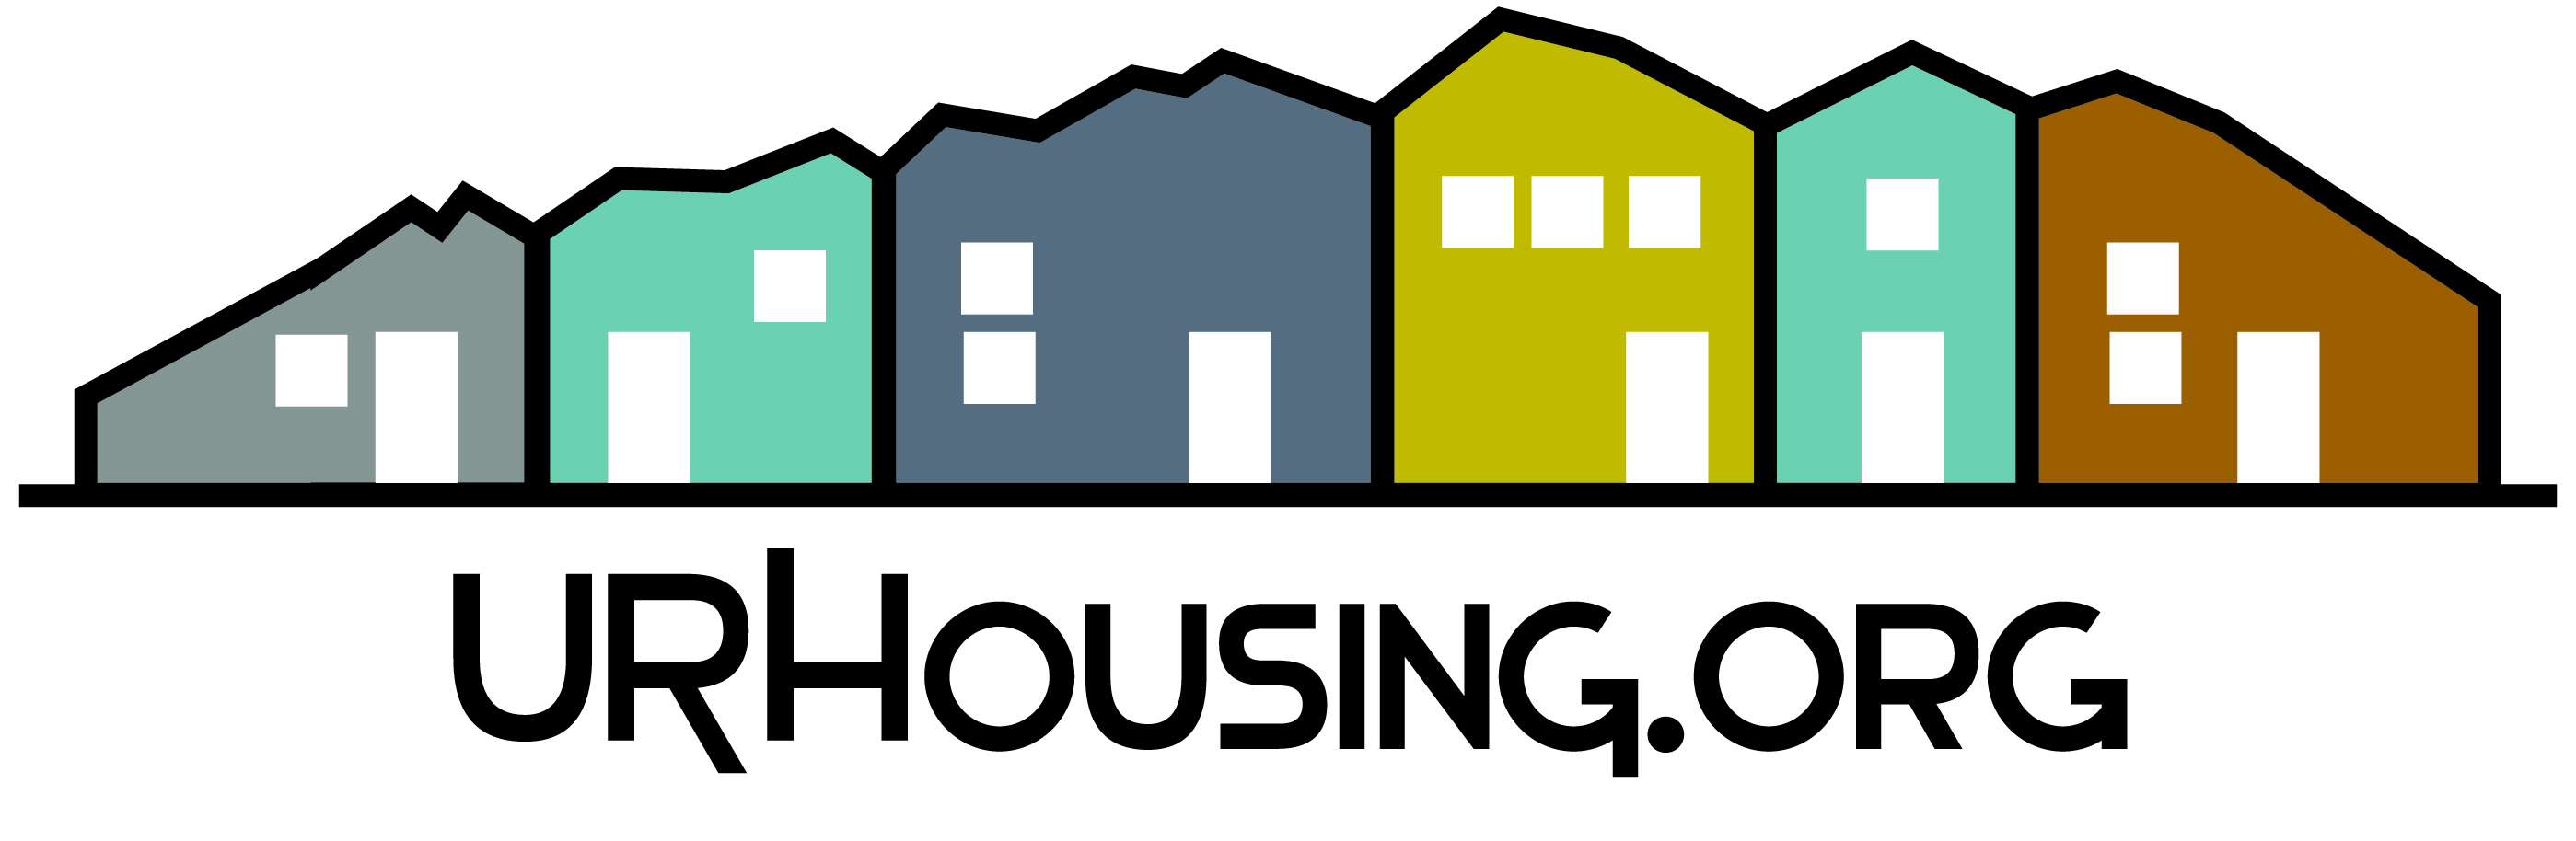 Utah Regional Housing